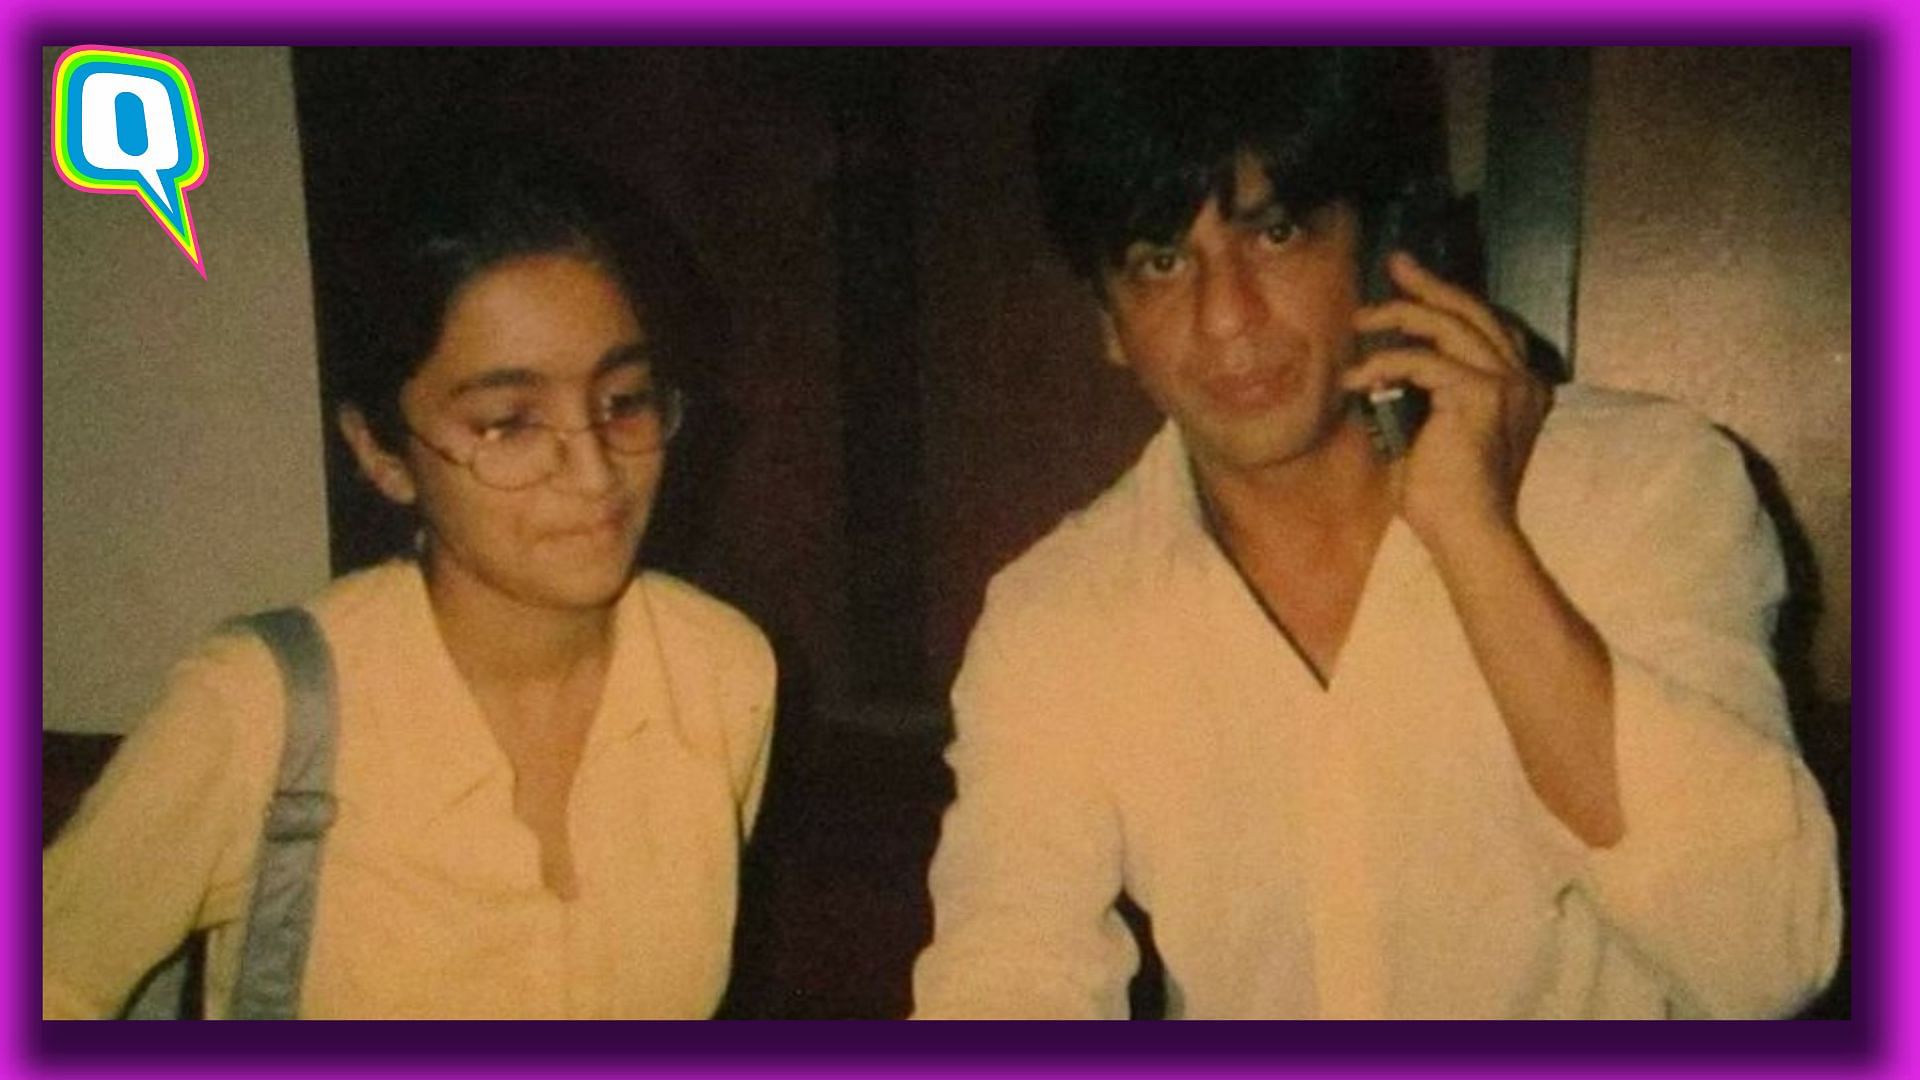 <div class="paragraphs"><p>Woman Shares Heartwarming Story About Meeting Shah Rukh Khan as a Child</p></div>